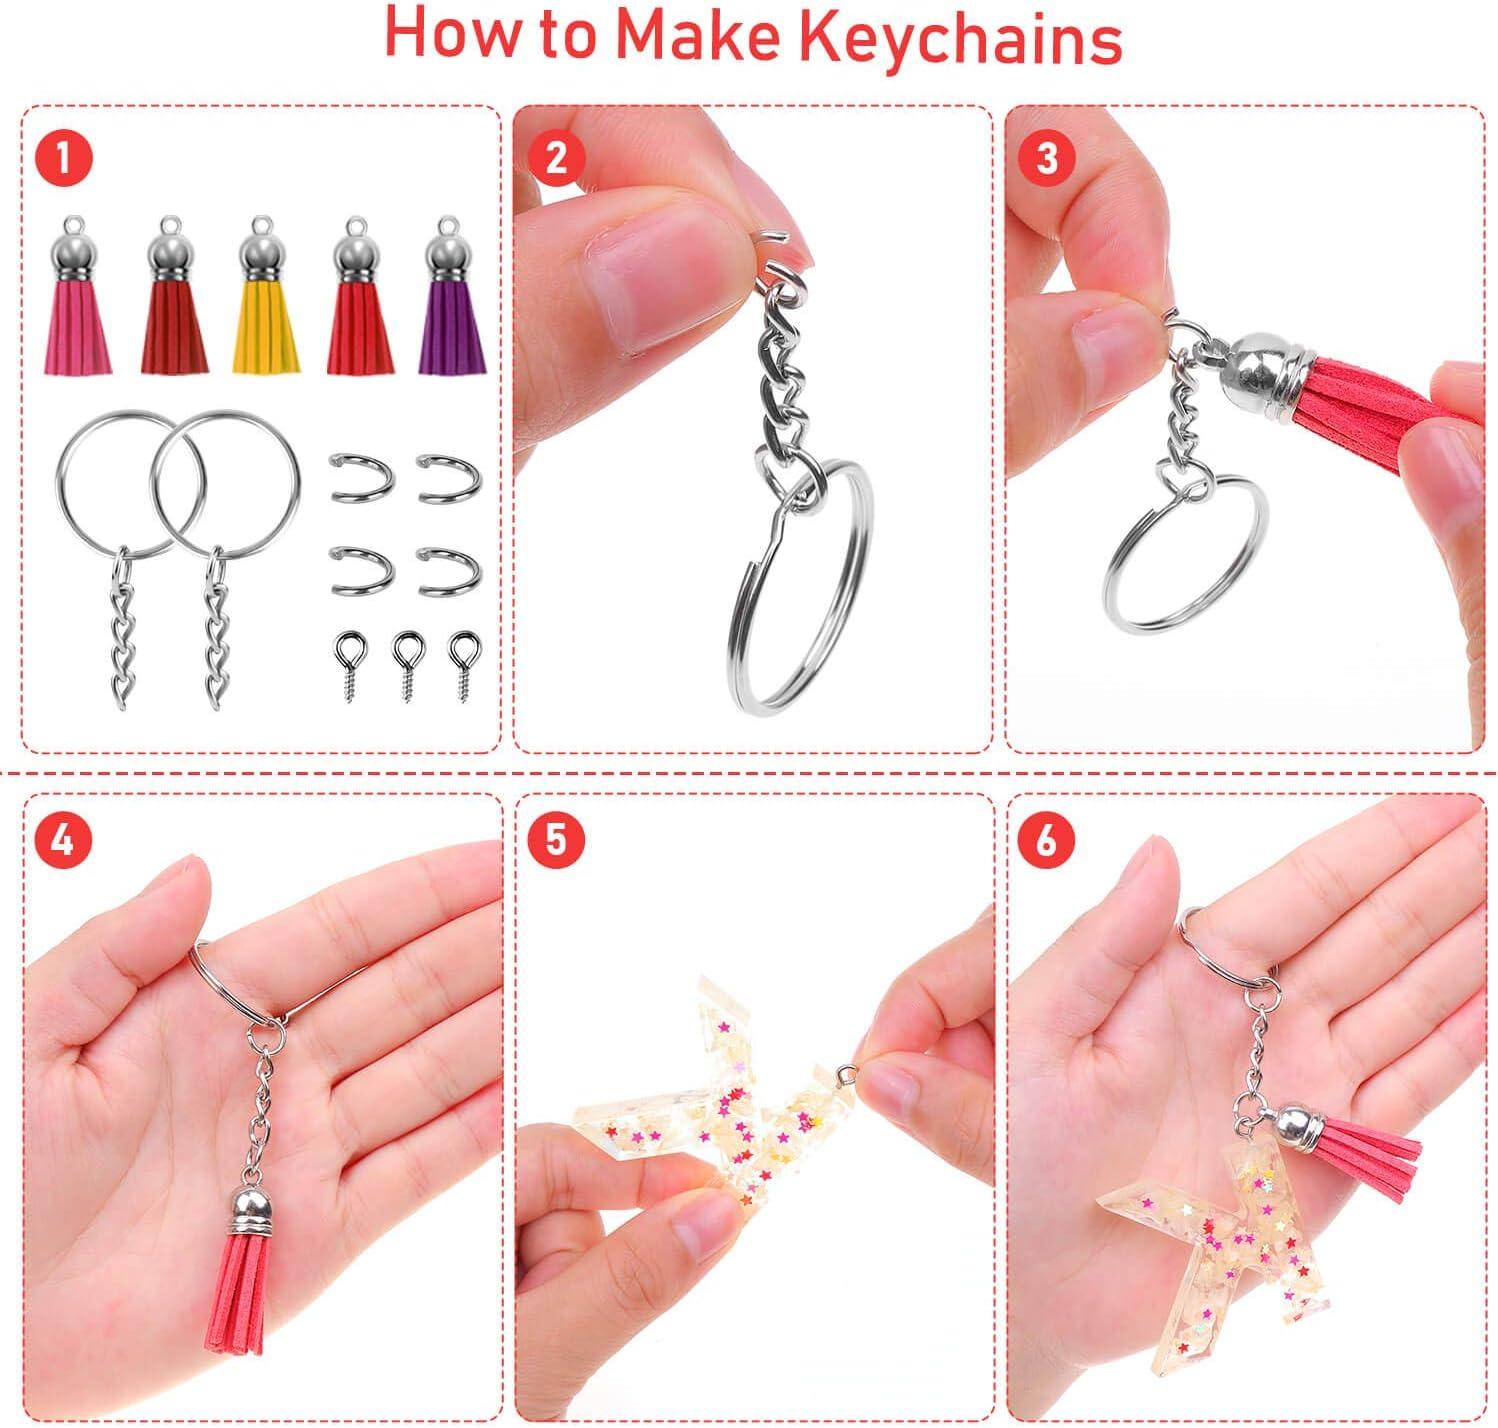 Tassel Keychain, Cridoz 400pcs Key Chains and Tassels Set Includes